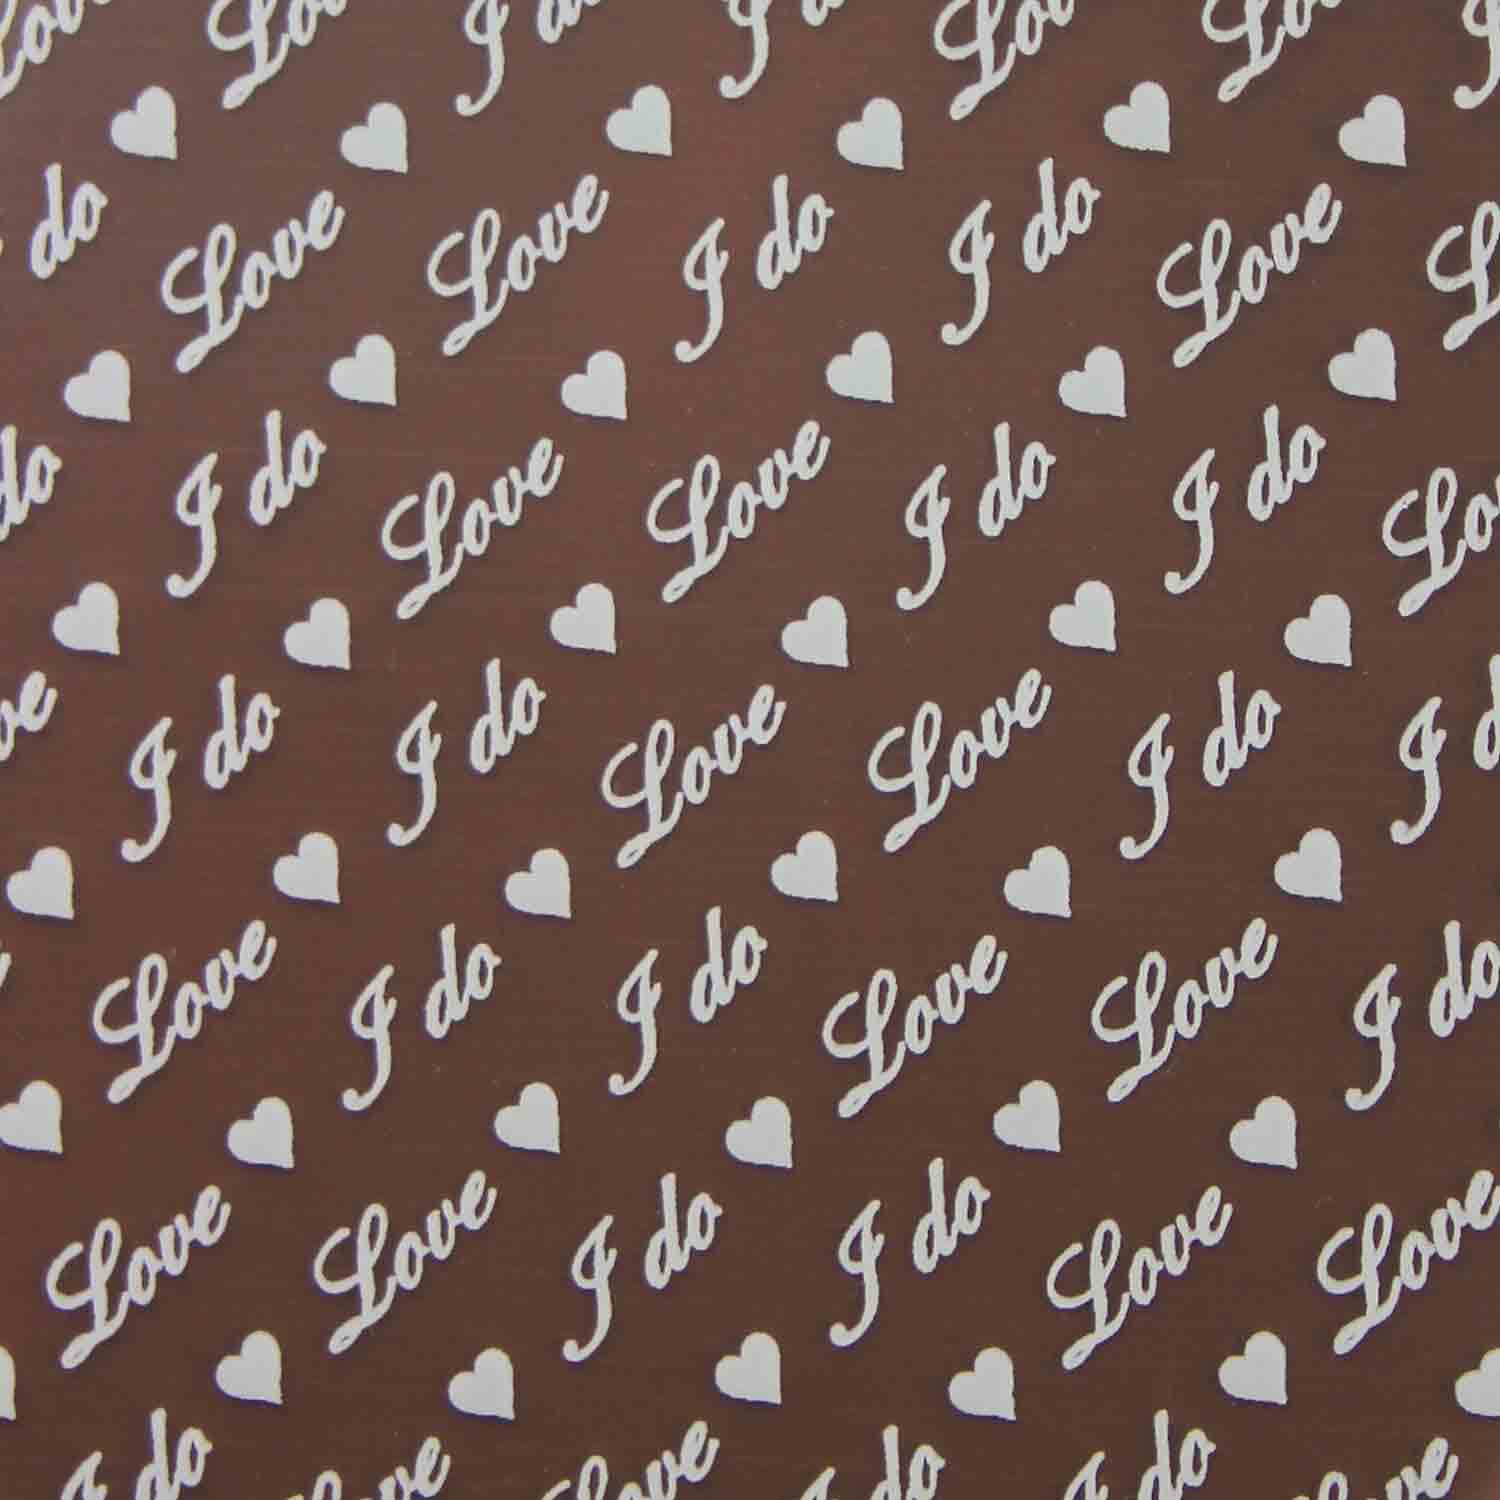 Chocolate Transfer Sheet - I Do, Love